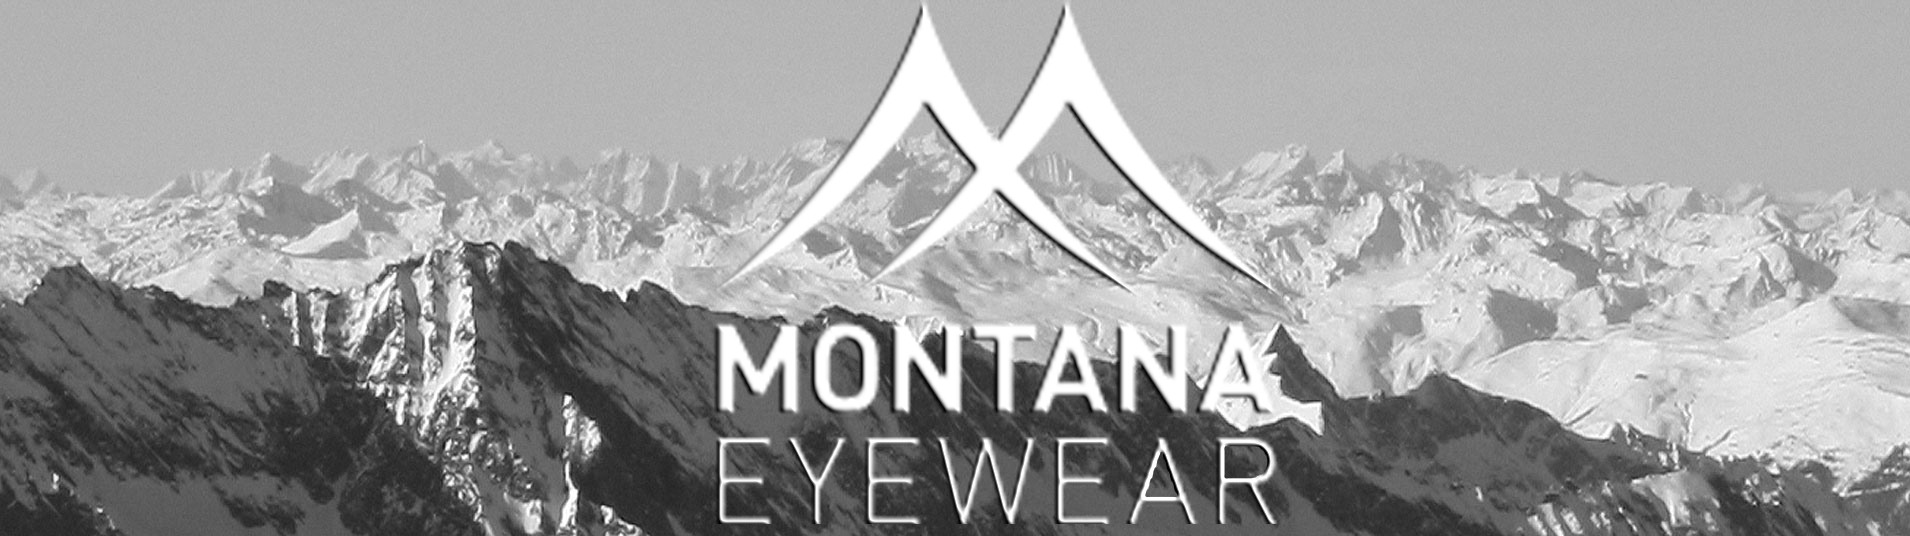 Categories - Sunglasses - Montana Eyewear - Polarized World